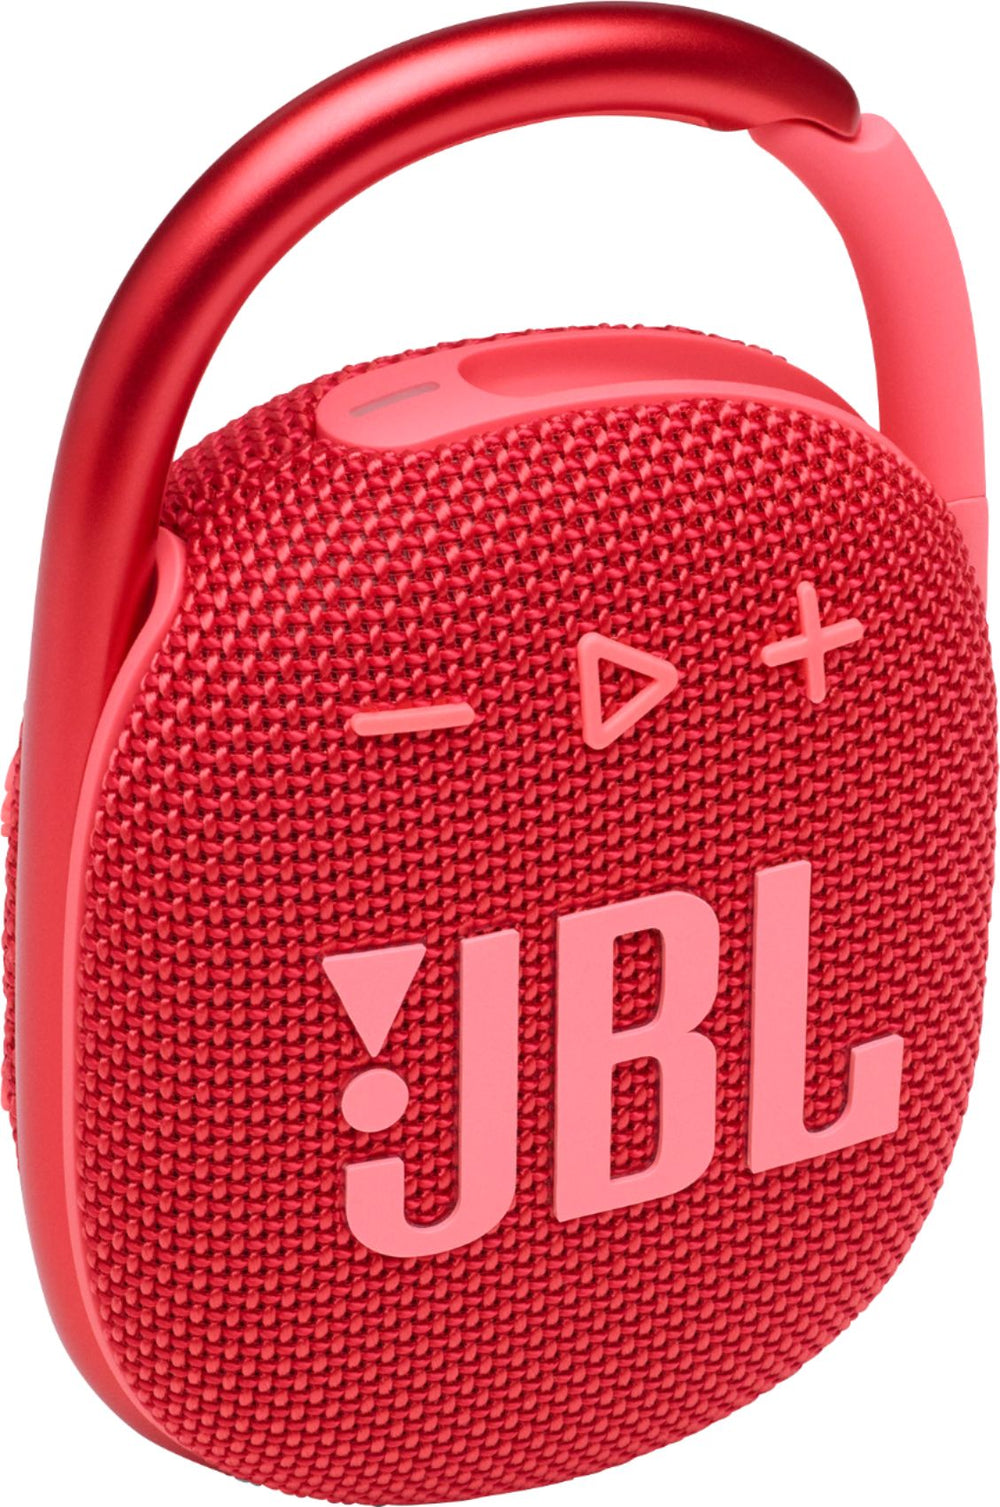 JBL - CLIP4 Portable Bluetooth Speaker - Red_1